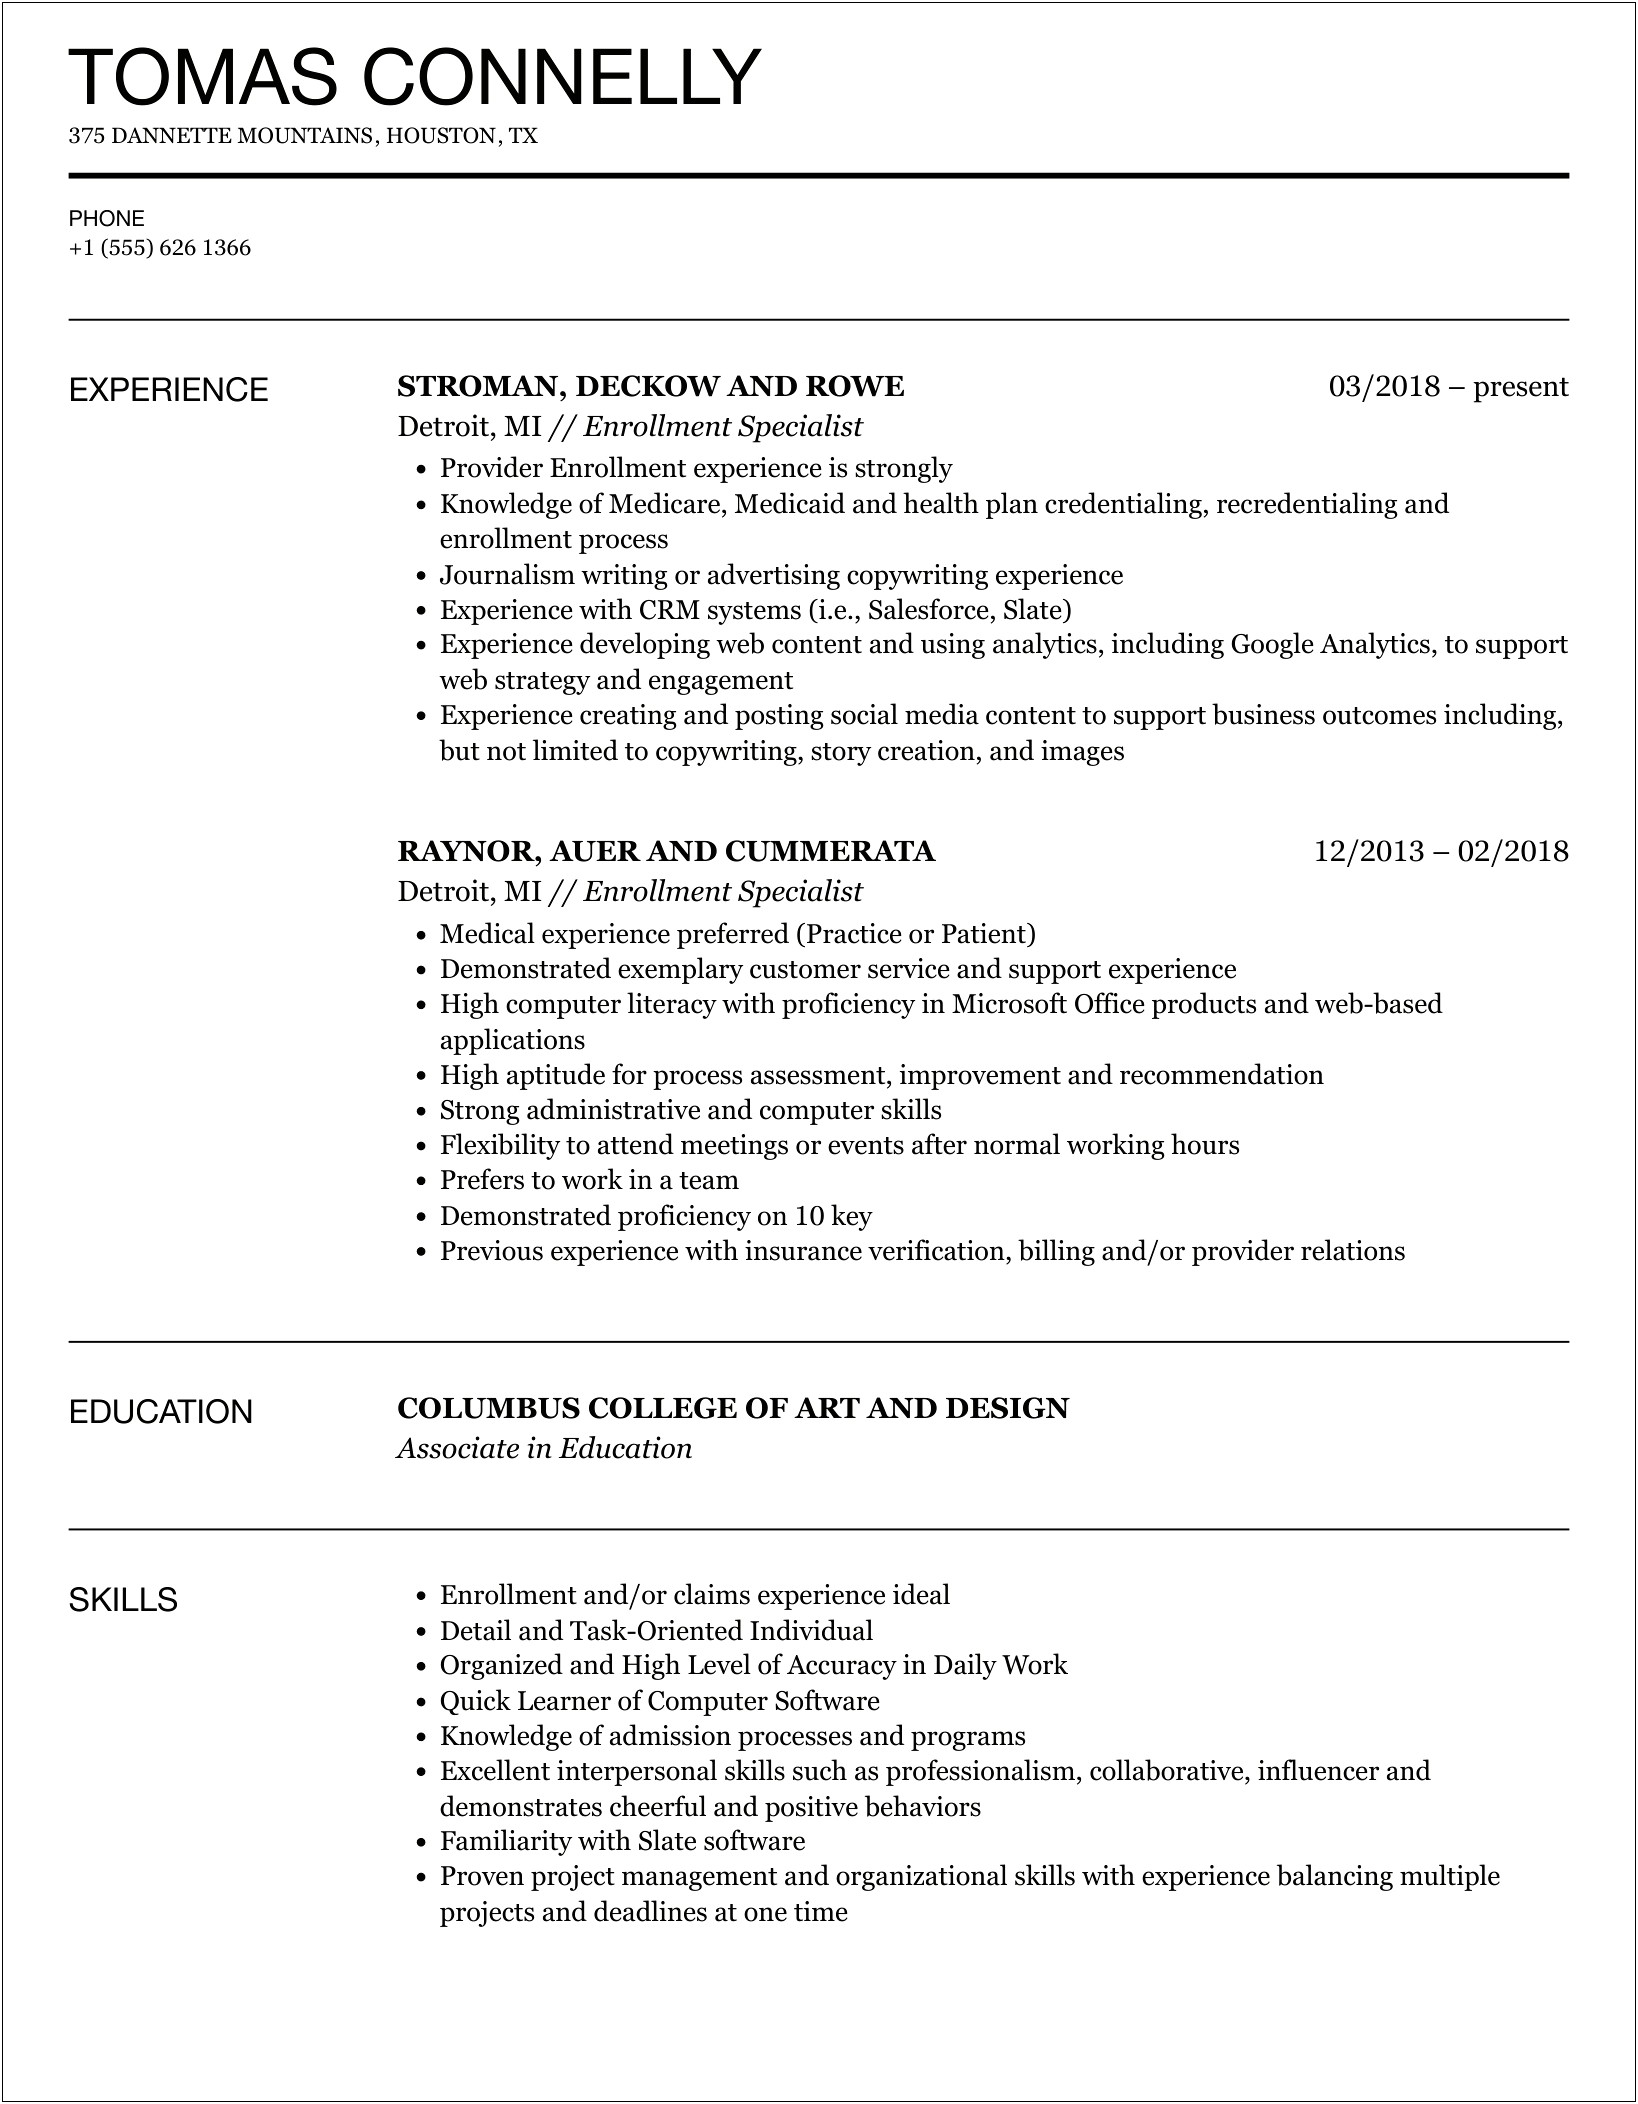 Sample Resume For Provider Enrollment Specialist